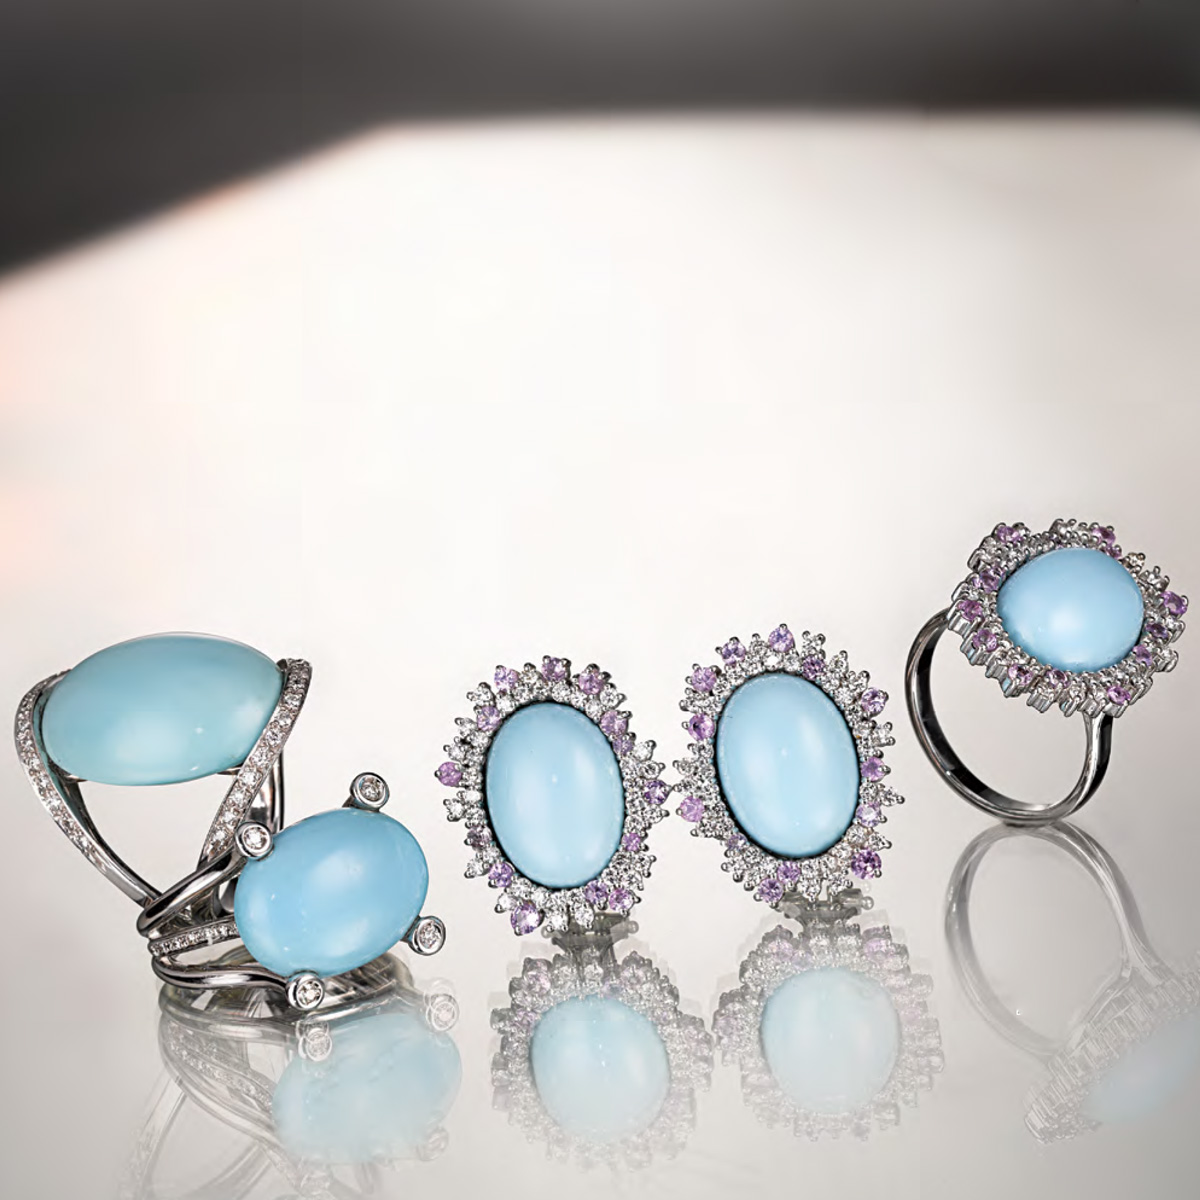 Gioielli Turchese - Turquoise jewels